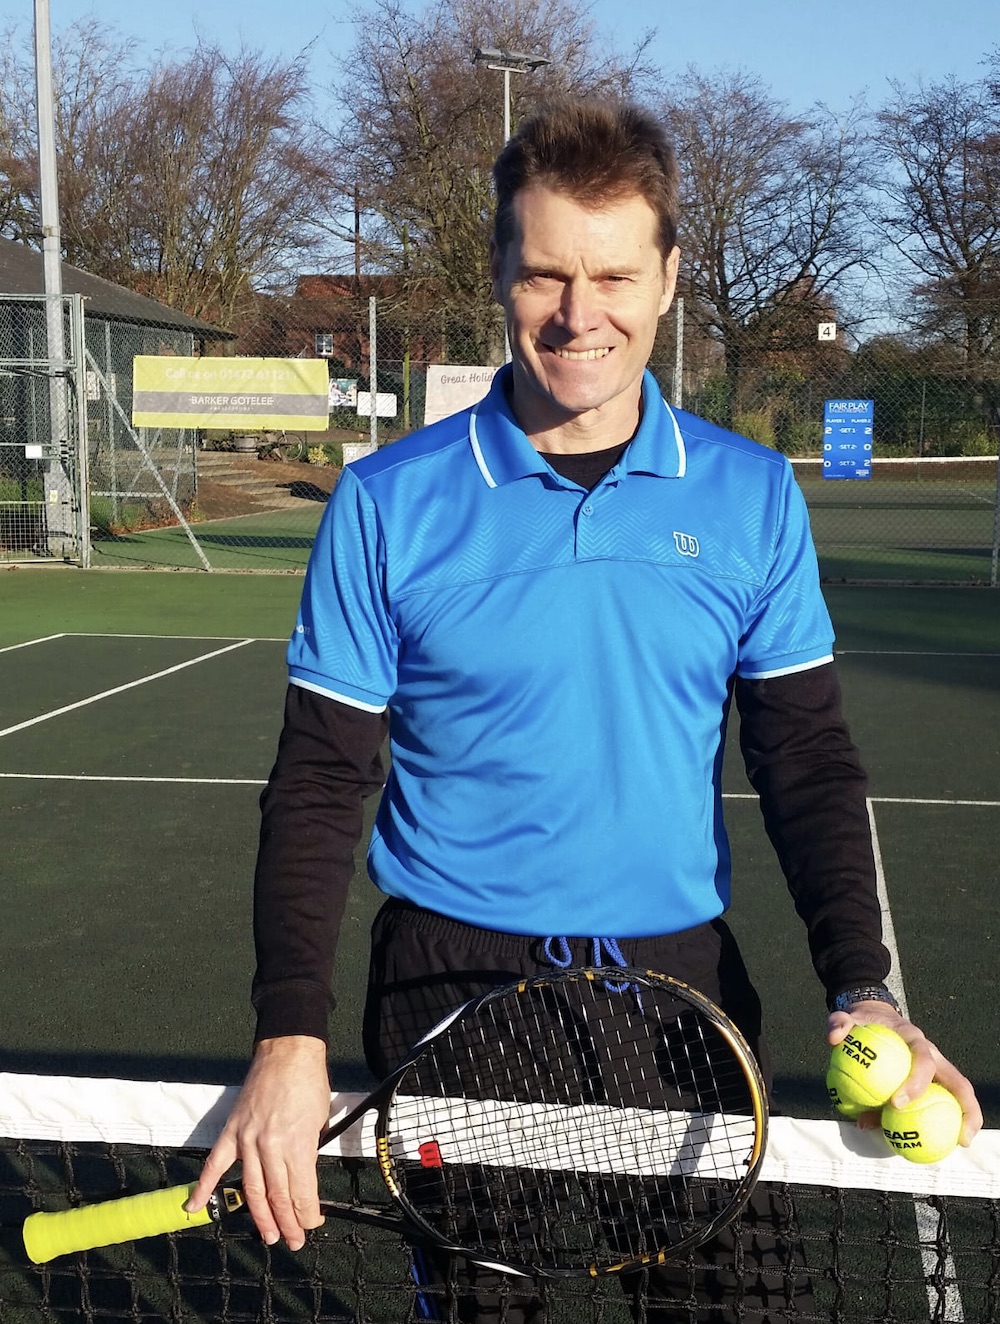 Rob Rickard part of the coaching team at Woodbridge Tennis Club in Suffolk